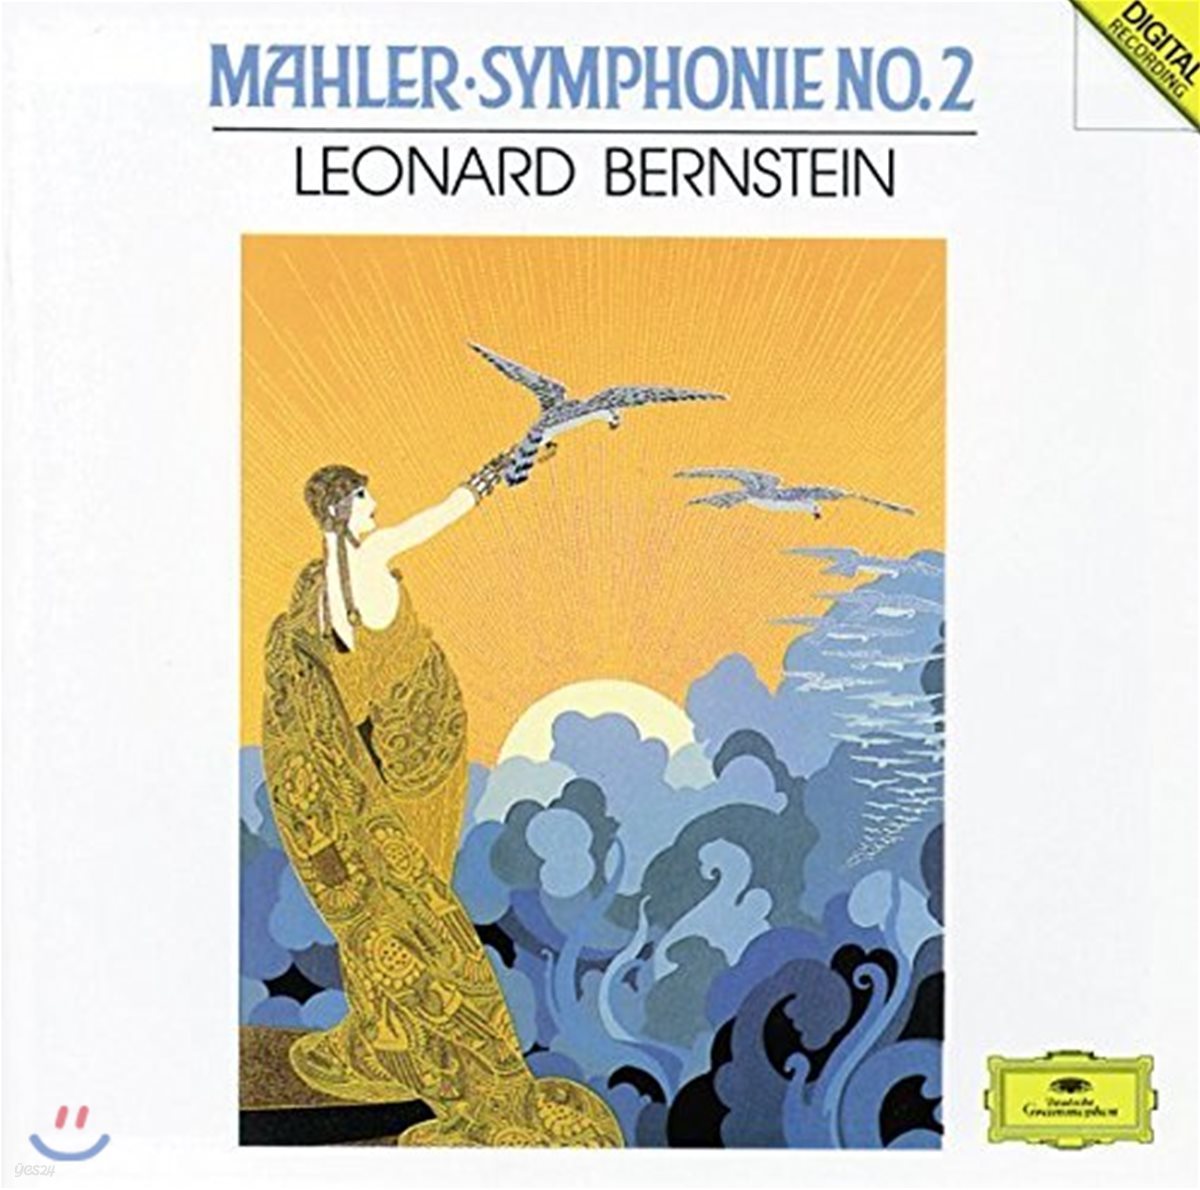 Leonard Bernstein 말러: 교향곡 2번 - 번스타인 (Mahler: Symphony No. 2)